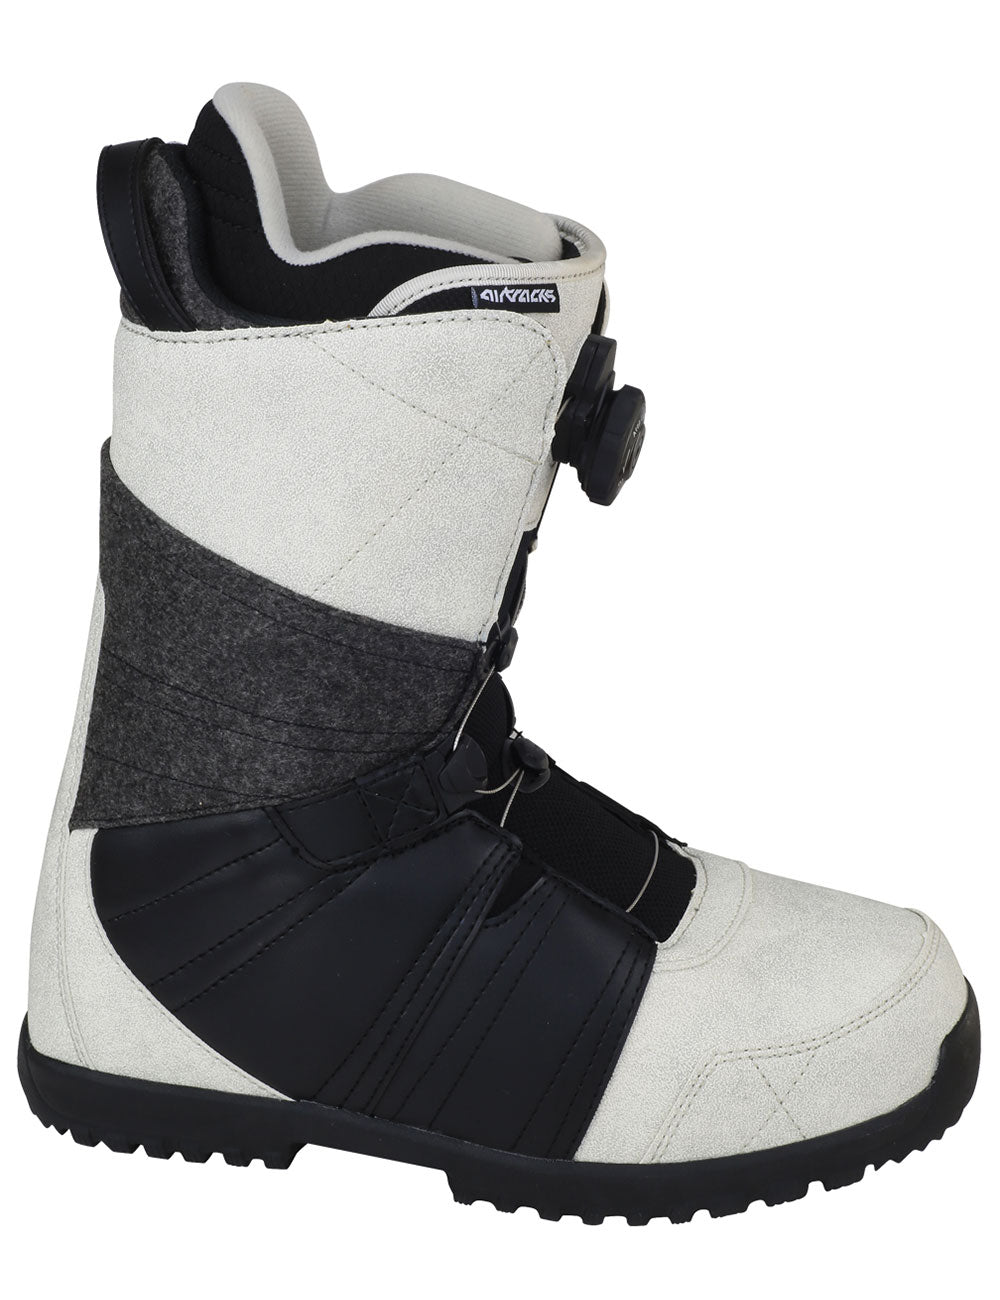 snowboard-boots-softboots-herren-damen-white-star-quick-atop-boa-fast-lace-39-40-41-42-43-44-45-46